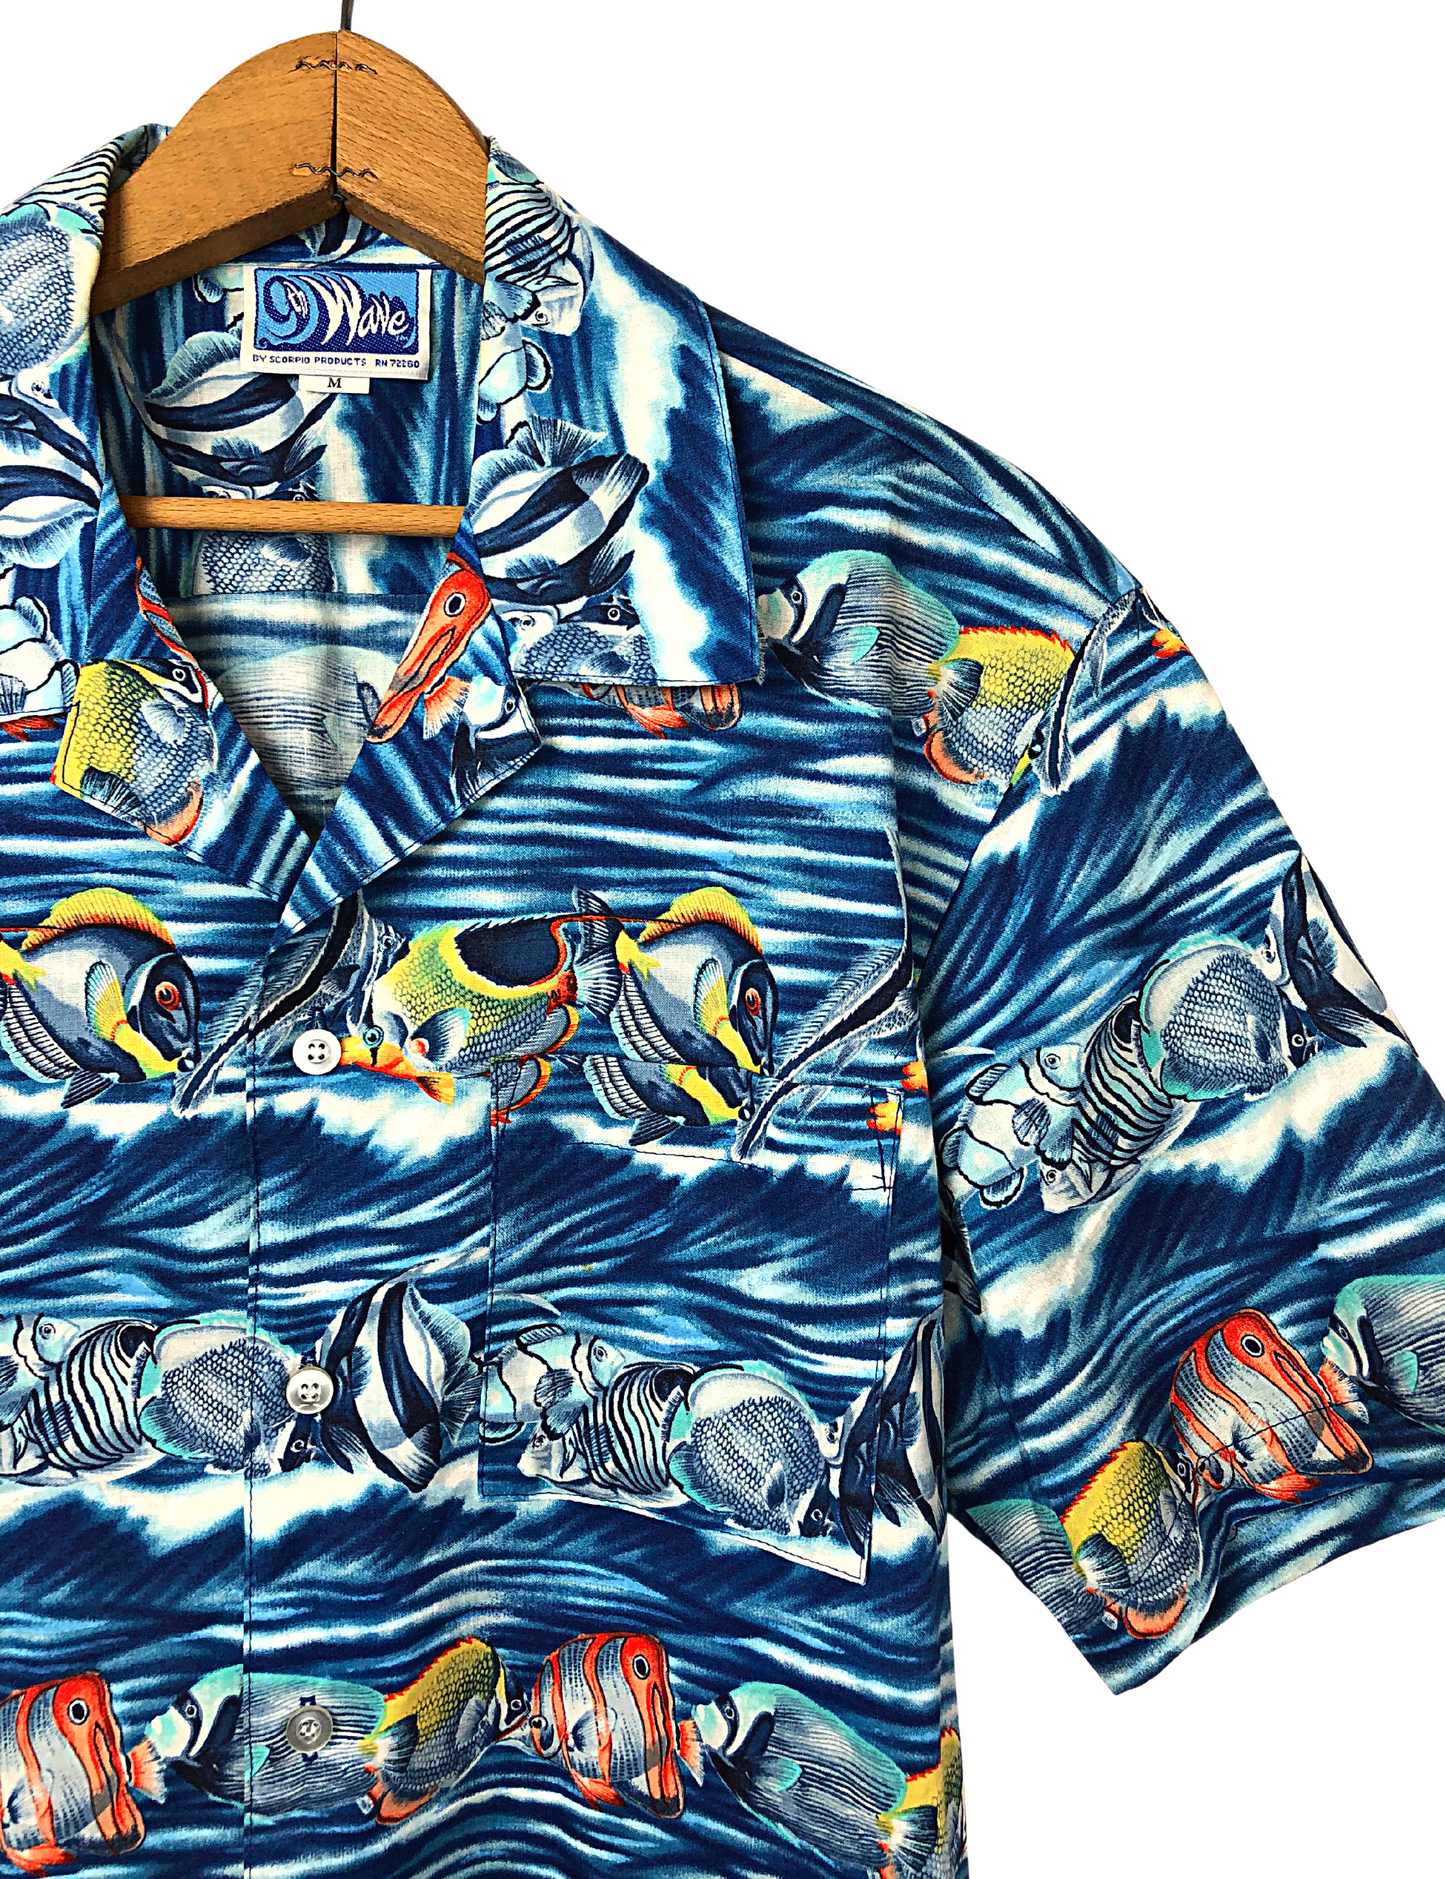 70’s Tropical Fish Hawaiian Floral 9th Wave Short Sleeve 100% Cotton Button Up Shirt